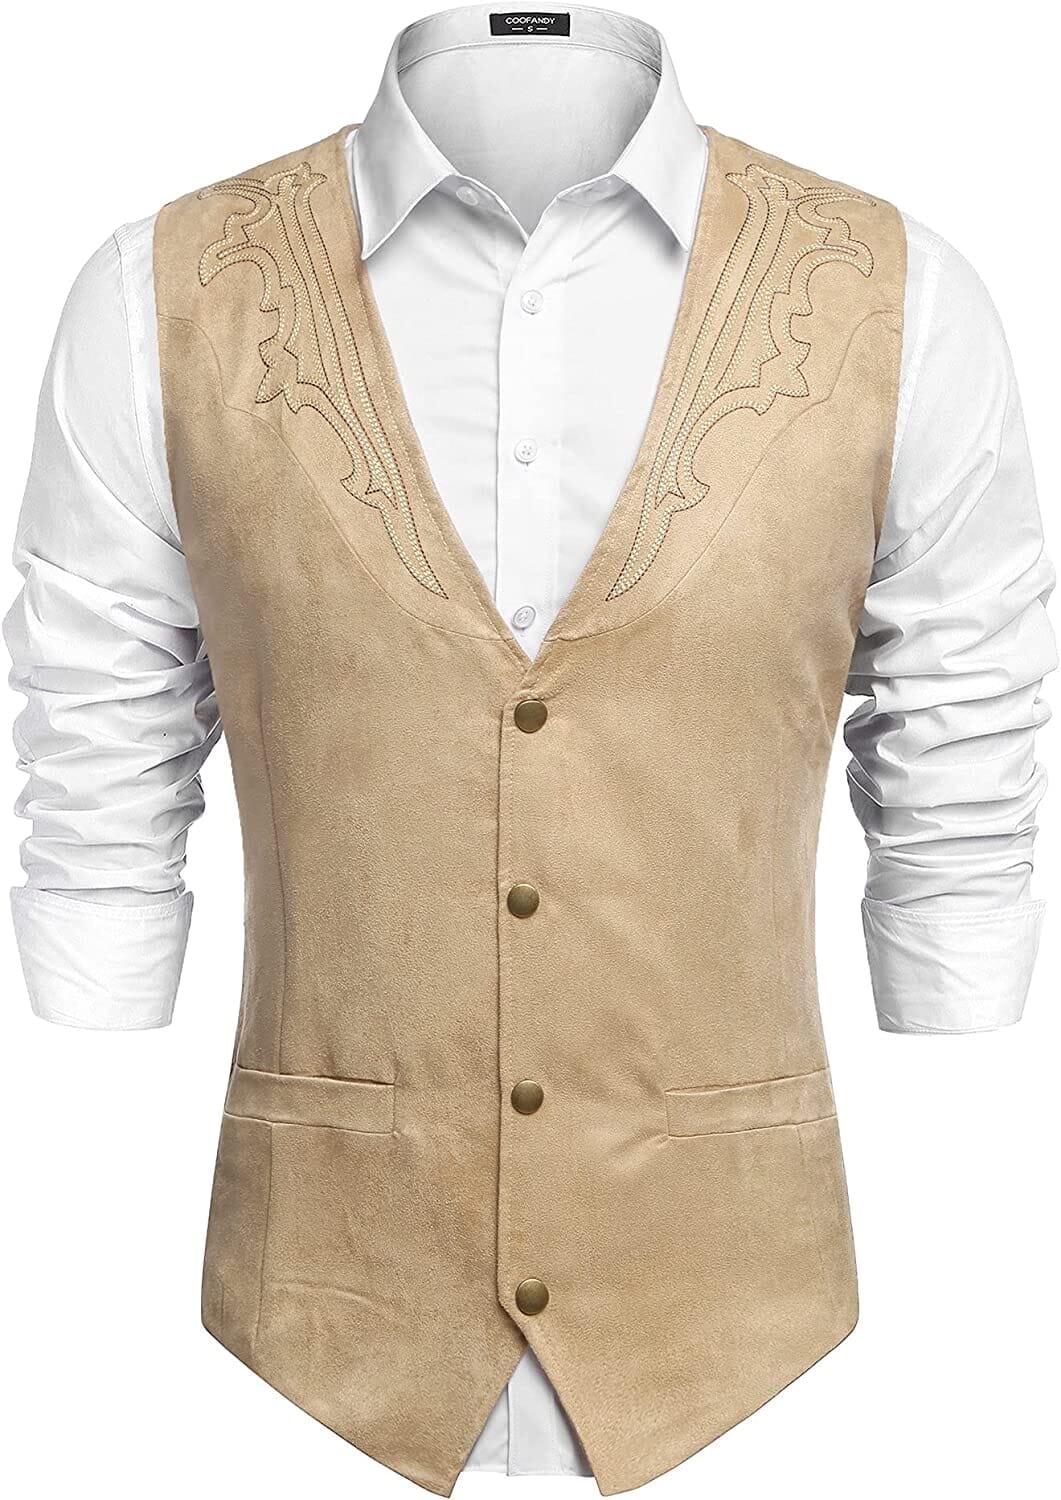 Western Suede Leather Vest Suit (US Only) Vest Coofandy's Beige S 